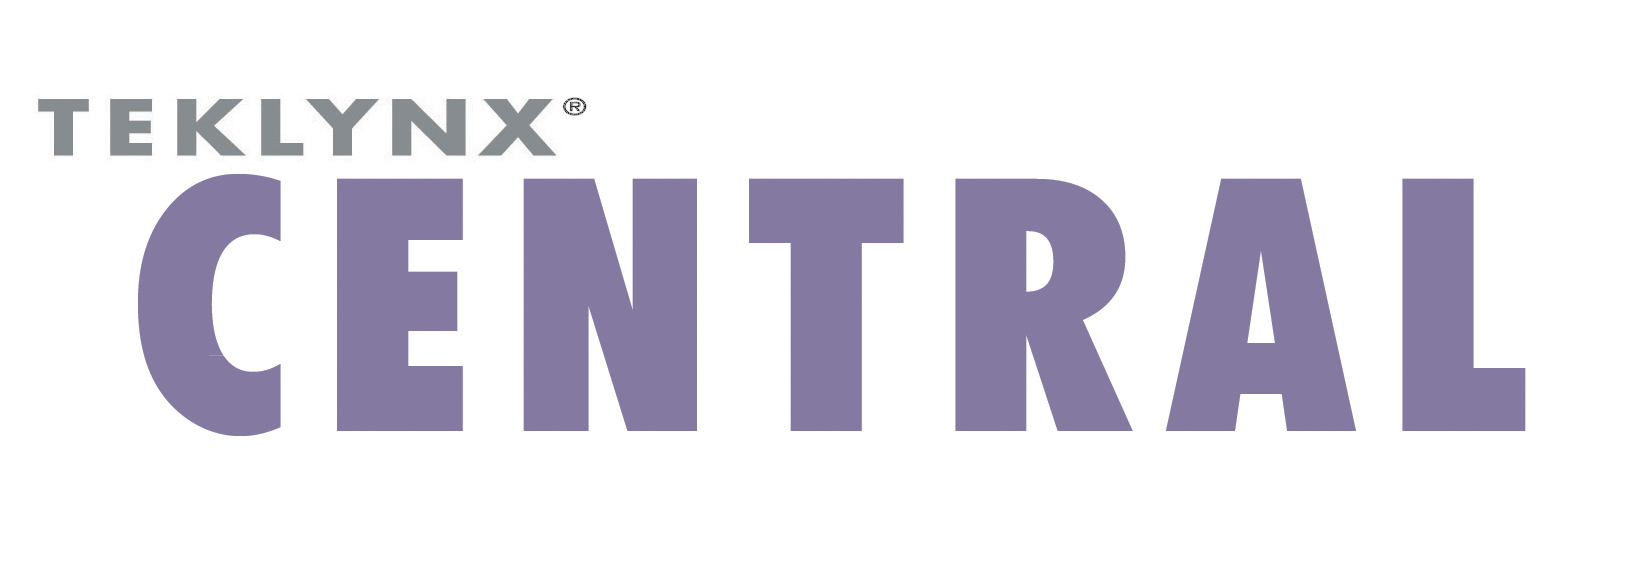 TEKLYNX CENTRAL logo